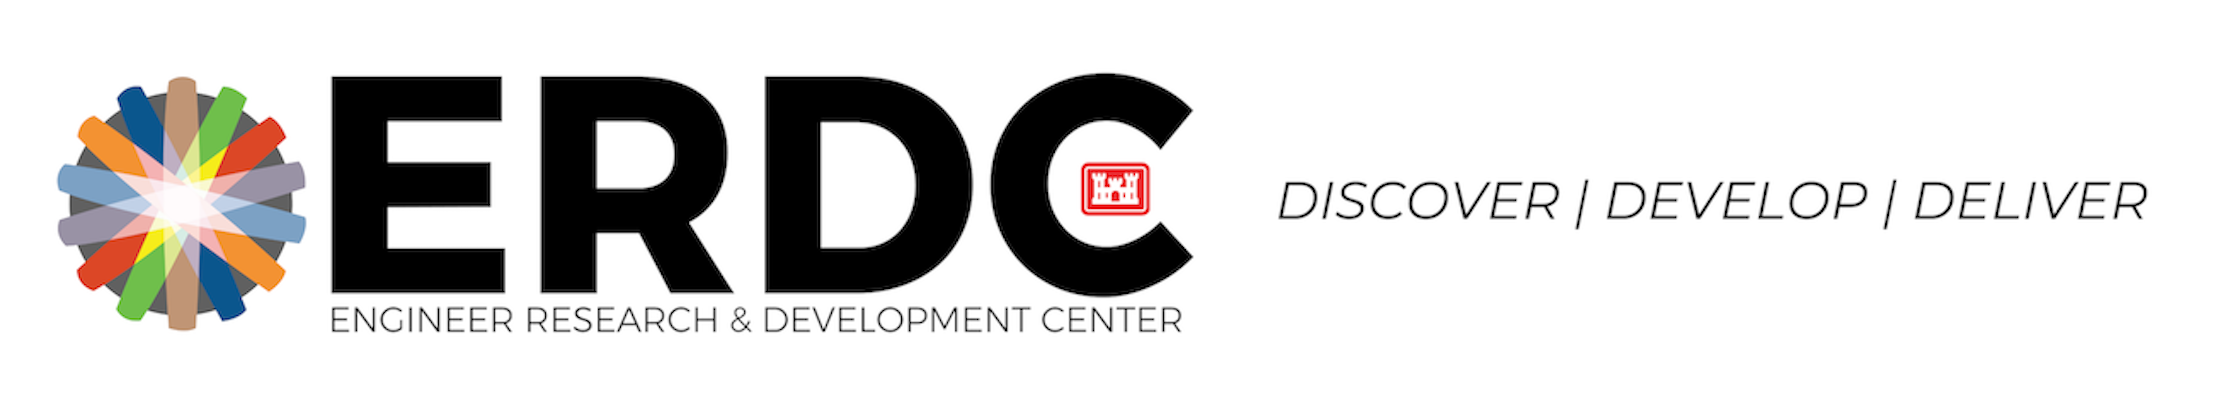 Image of ERDC logo